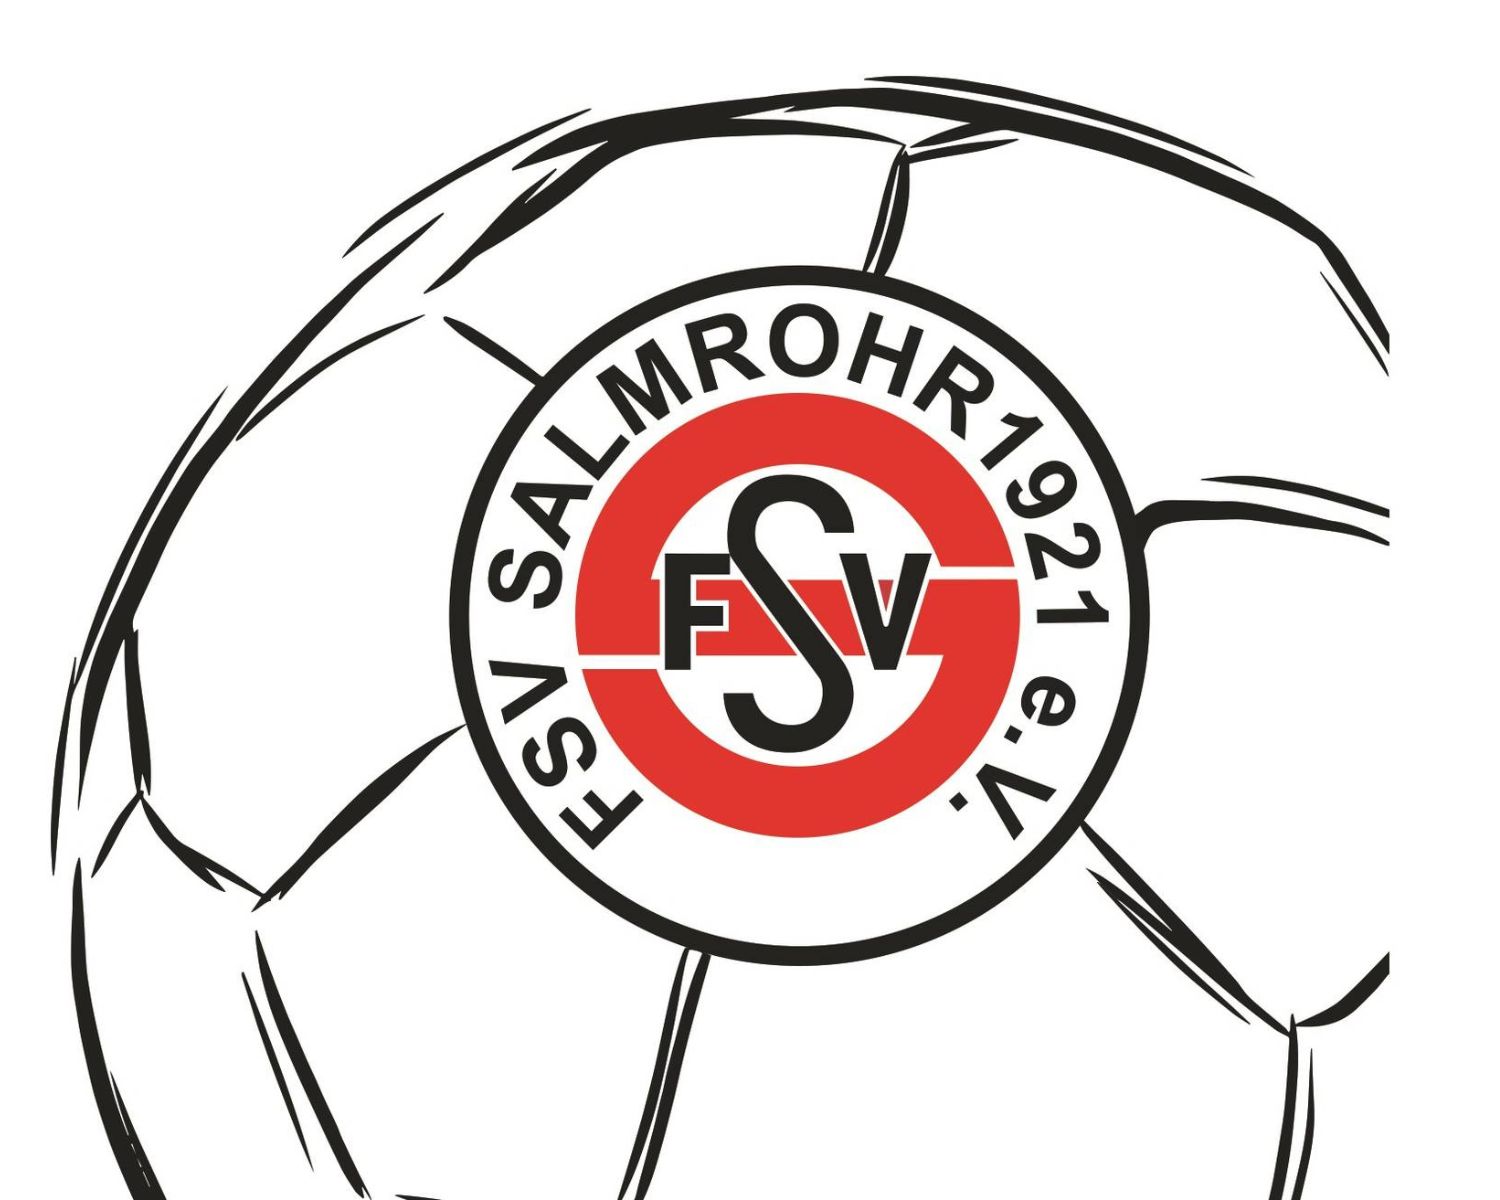 fsv-salmrohr-15-football-club-facts